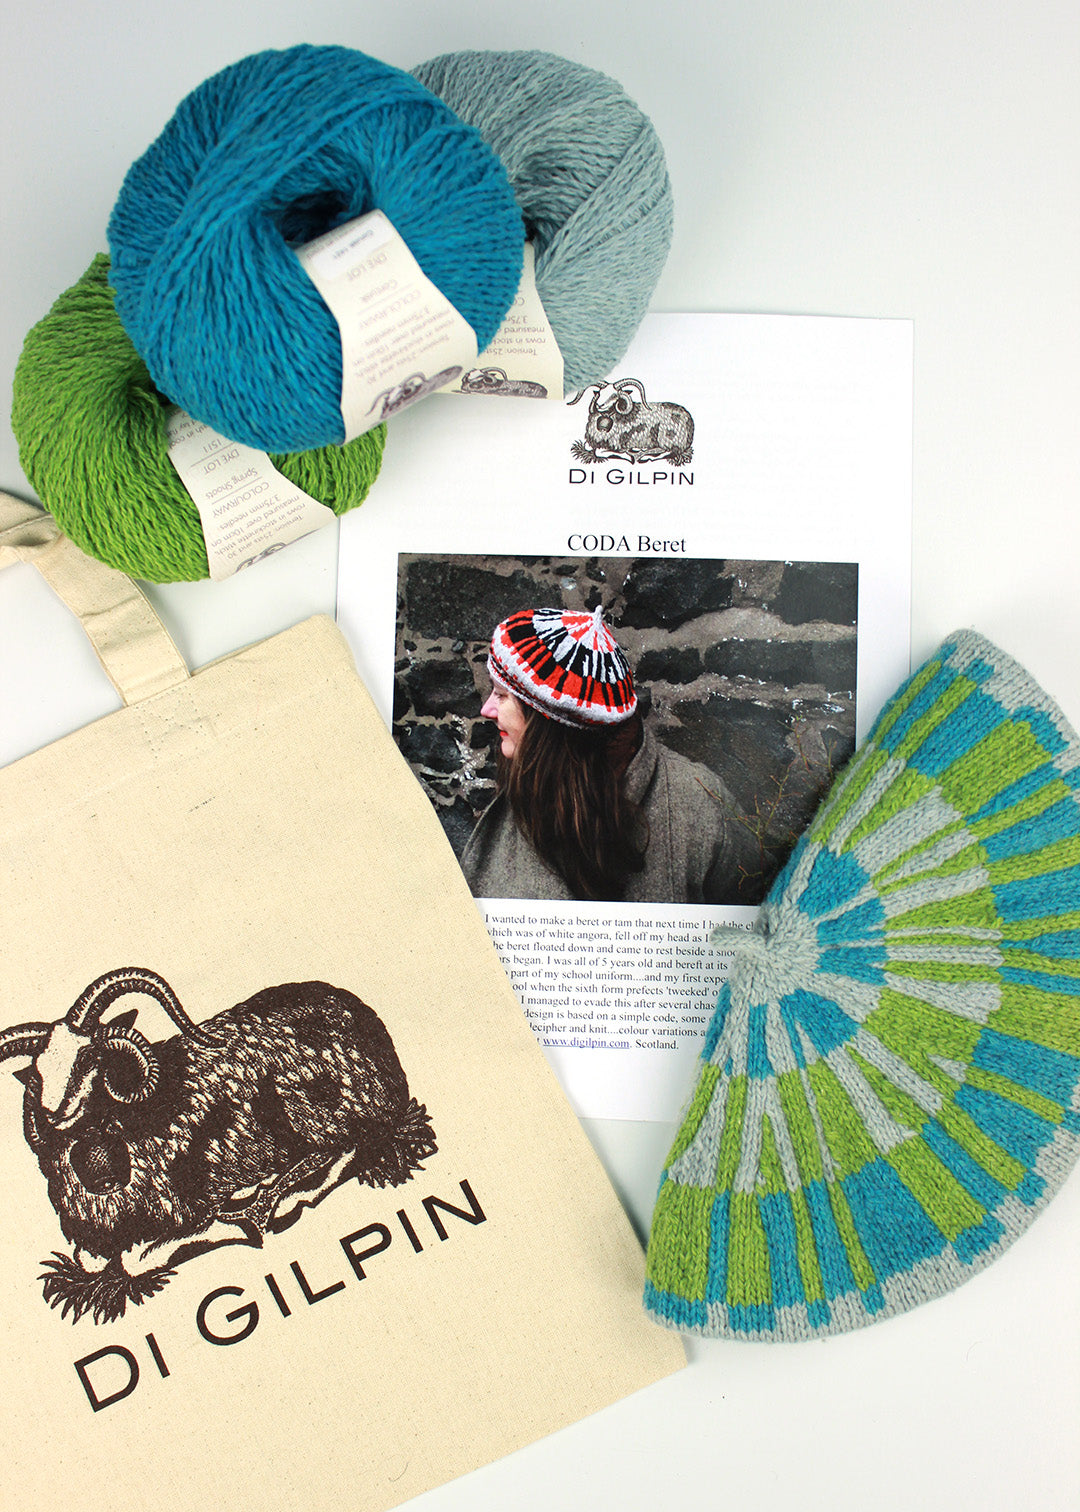 Coda Beret knitting pattern with wool, bag and sample. Scottish Textile Showcase.